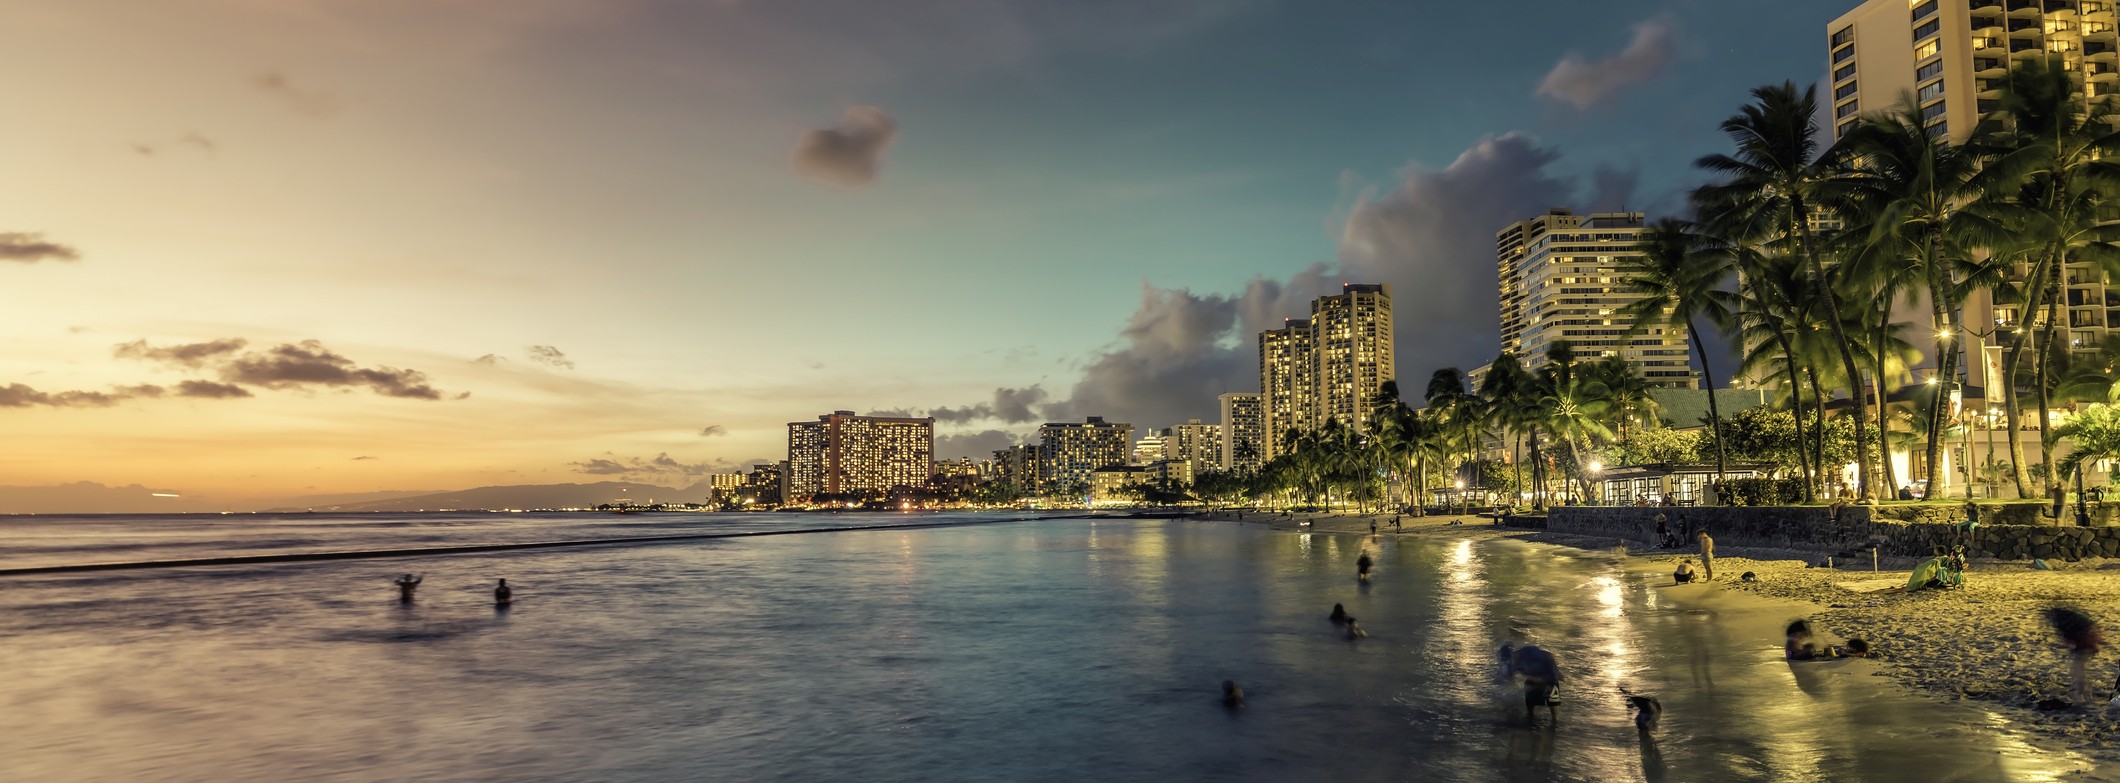 Buldings and beach of Honolulu, Hawaii